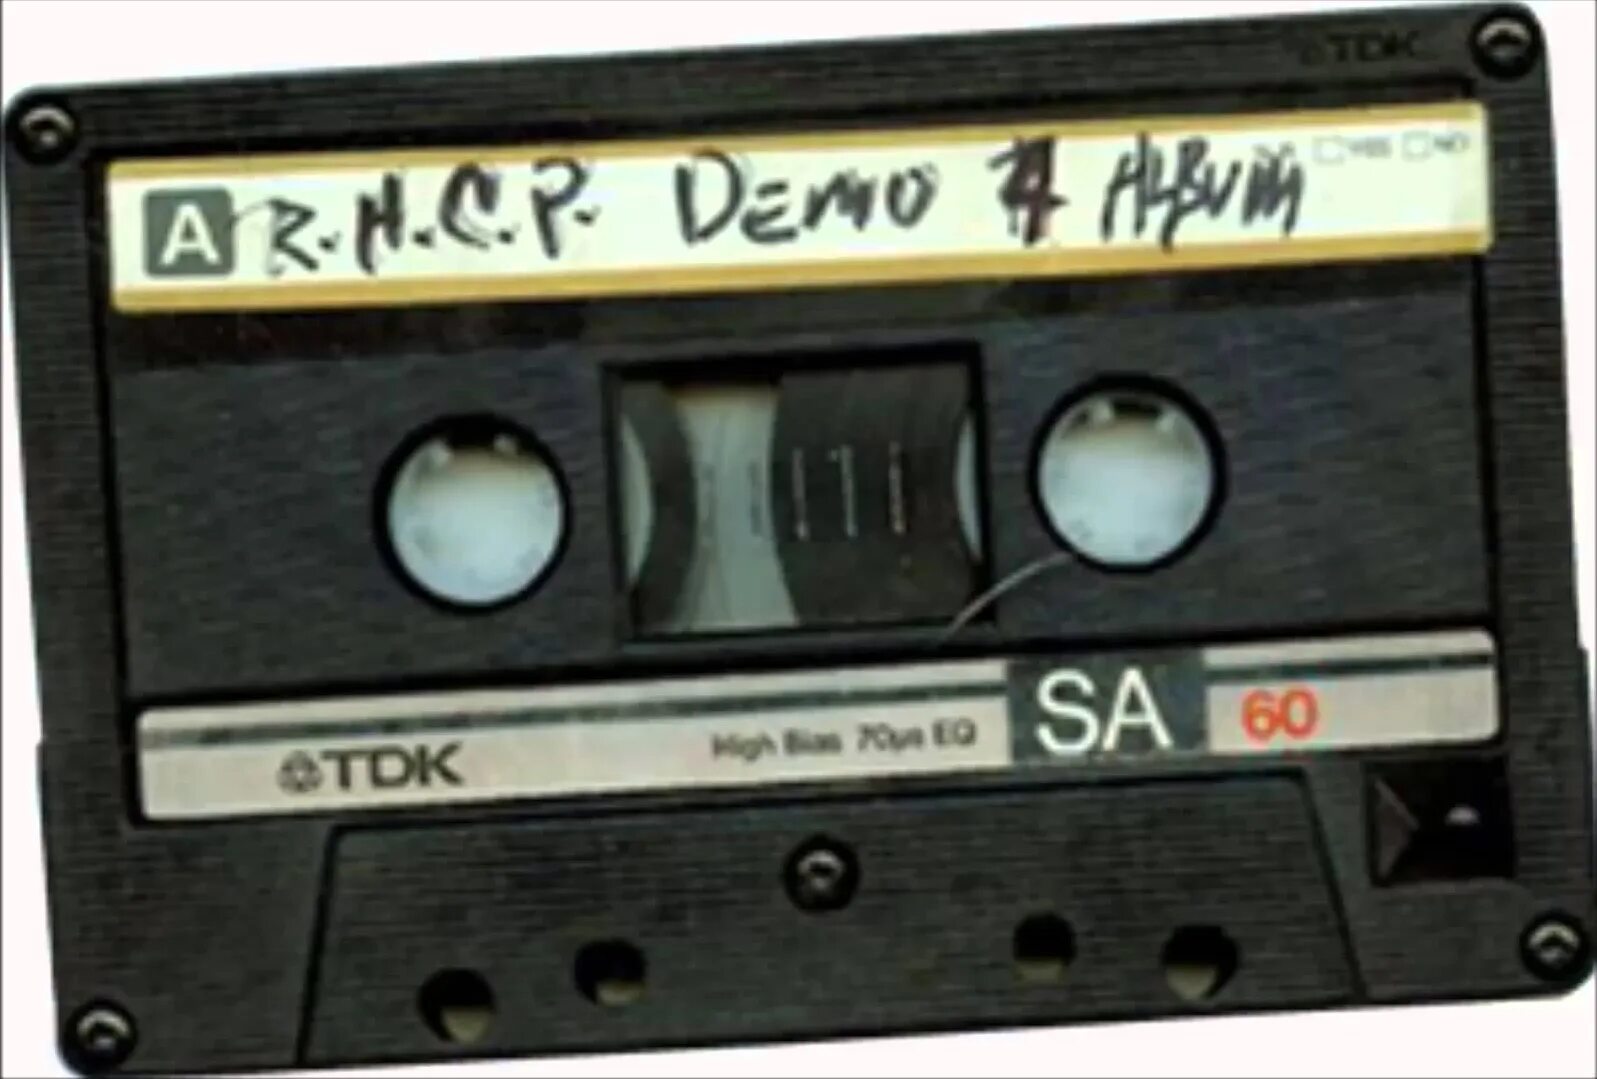 Retro Tapes демо. Sanyo Demonstration Tape. RHCP 1983. Liam Demo Tape. Demo tapes